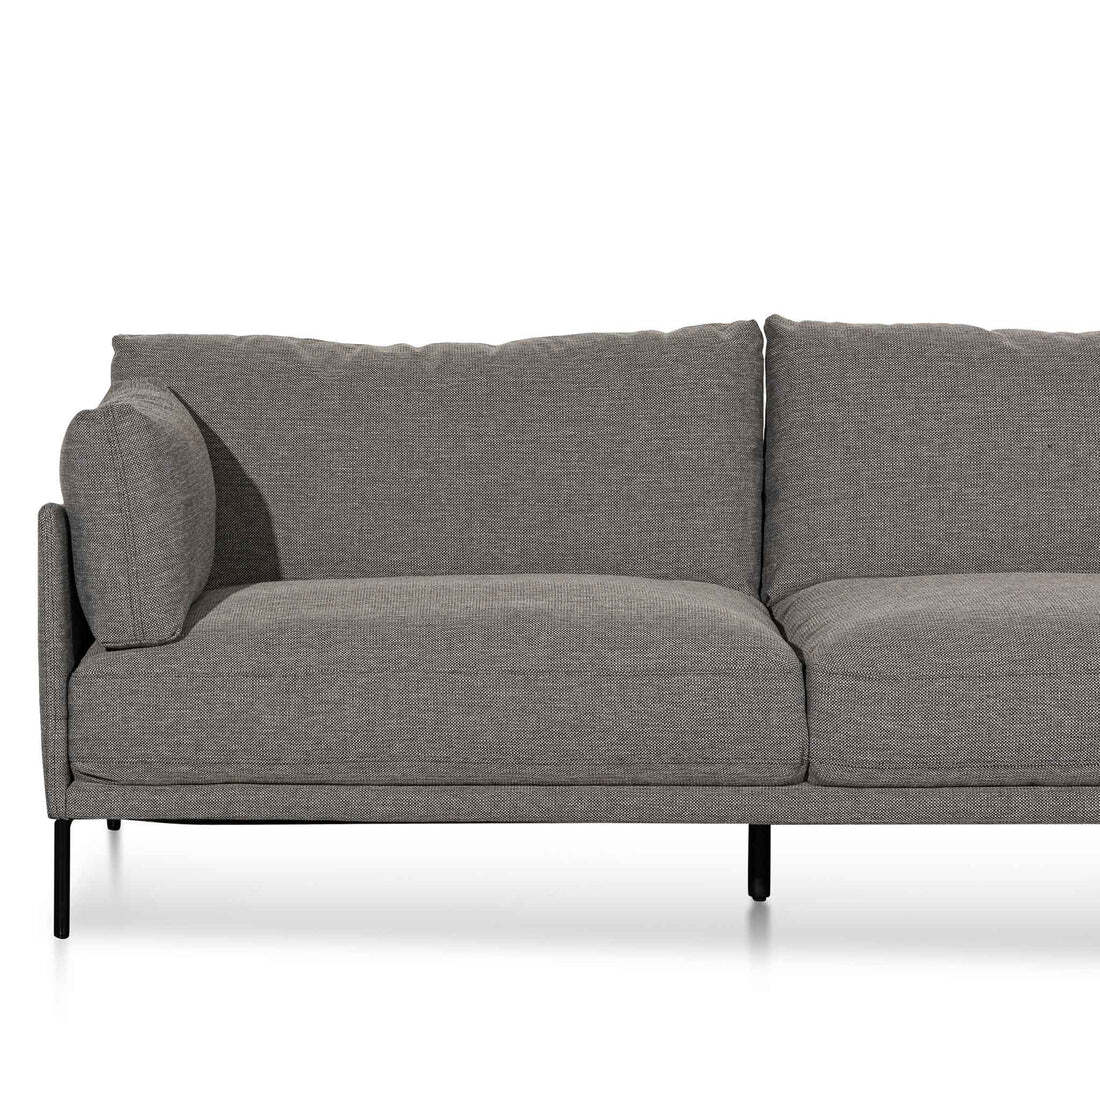 Memphis 4 Seater Right Chaise Fabric Sofa - Graphite Grey